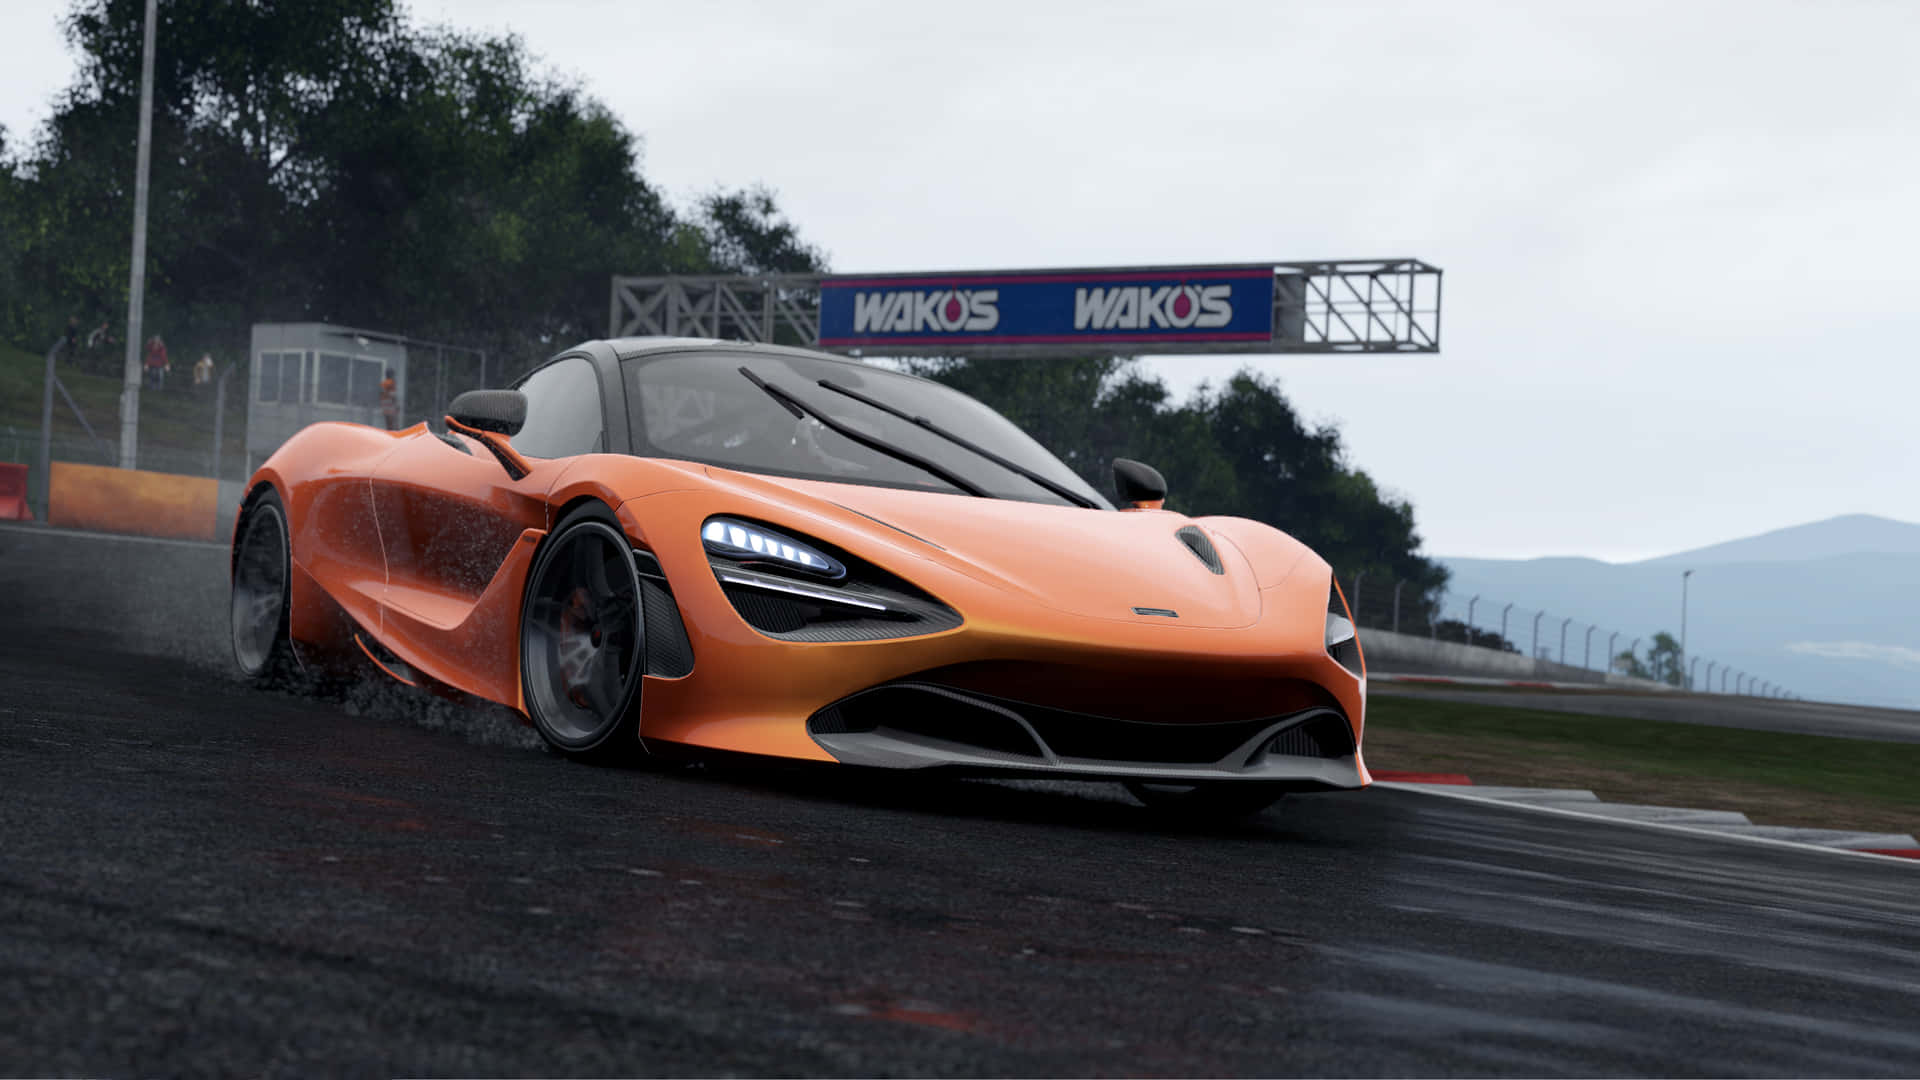 "The Bold and Elegant 4K McLaren 720s"